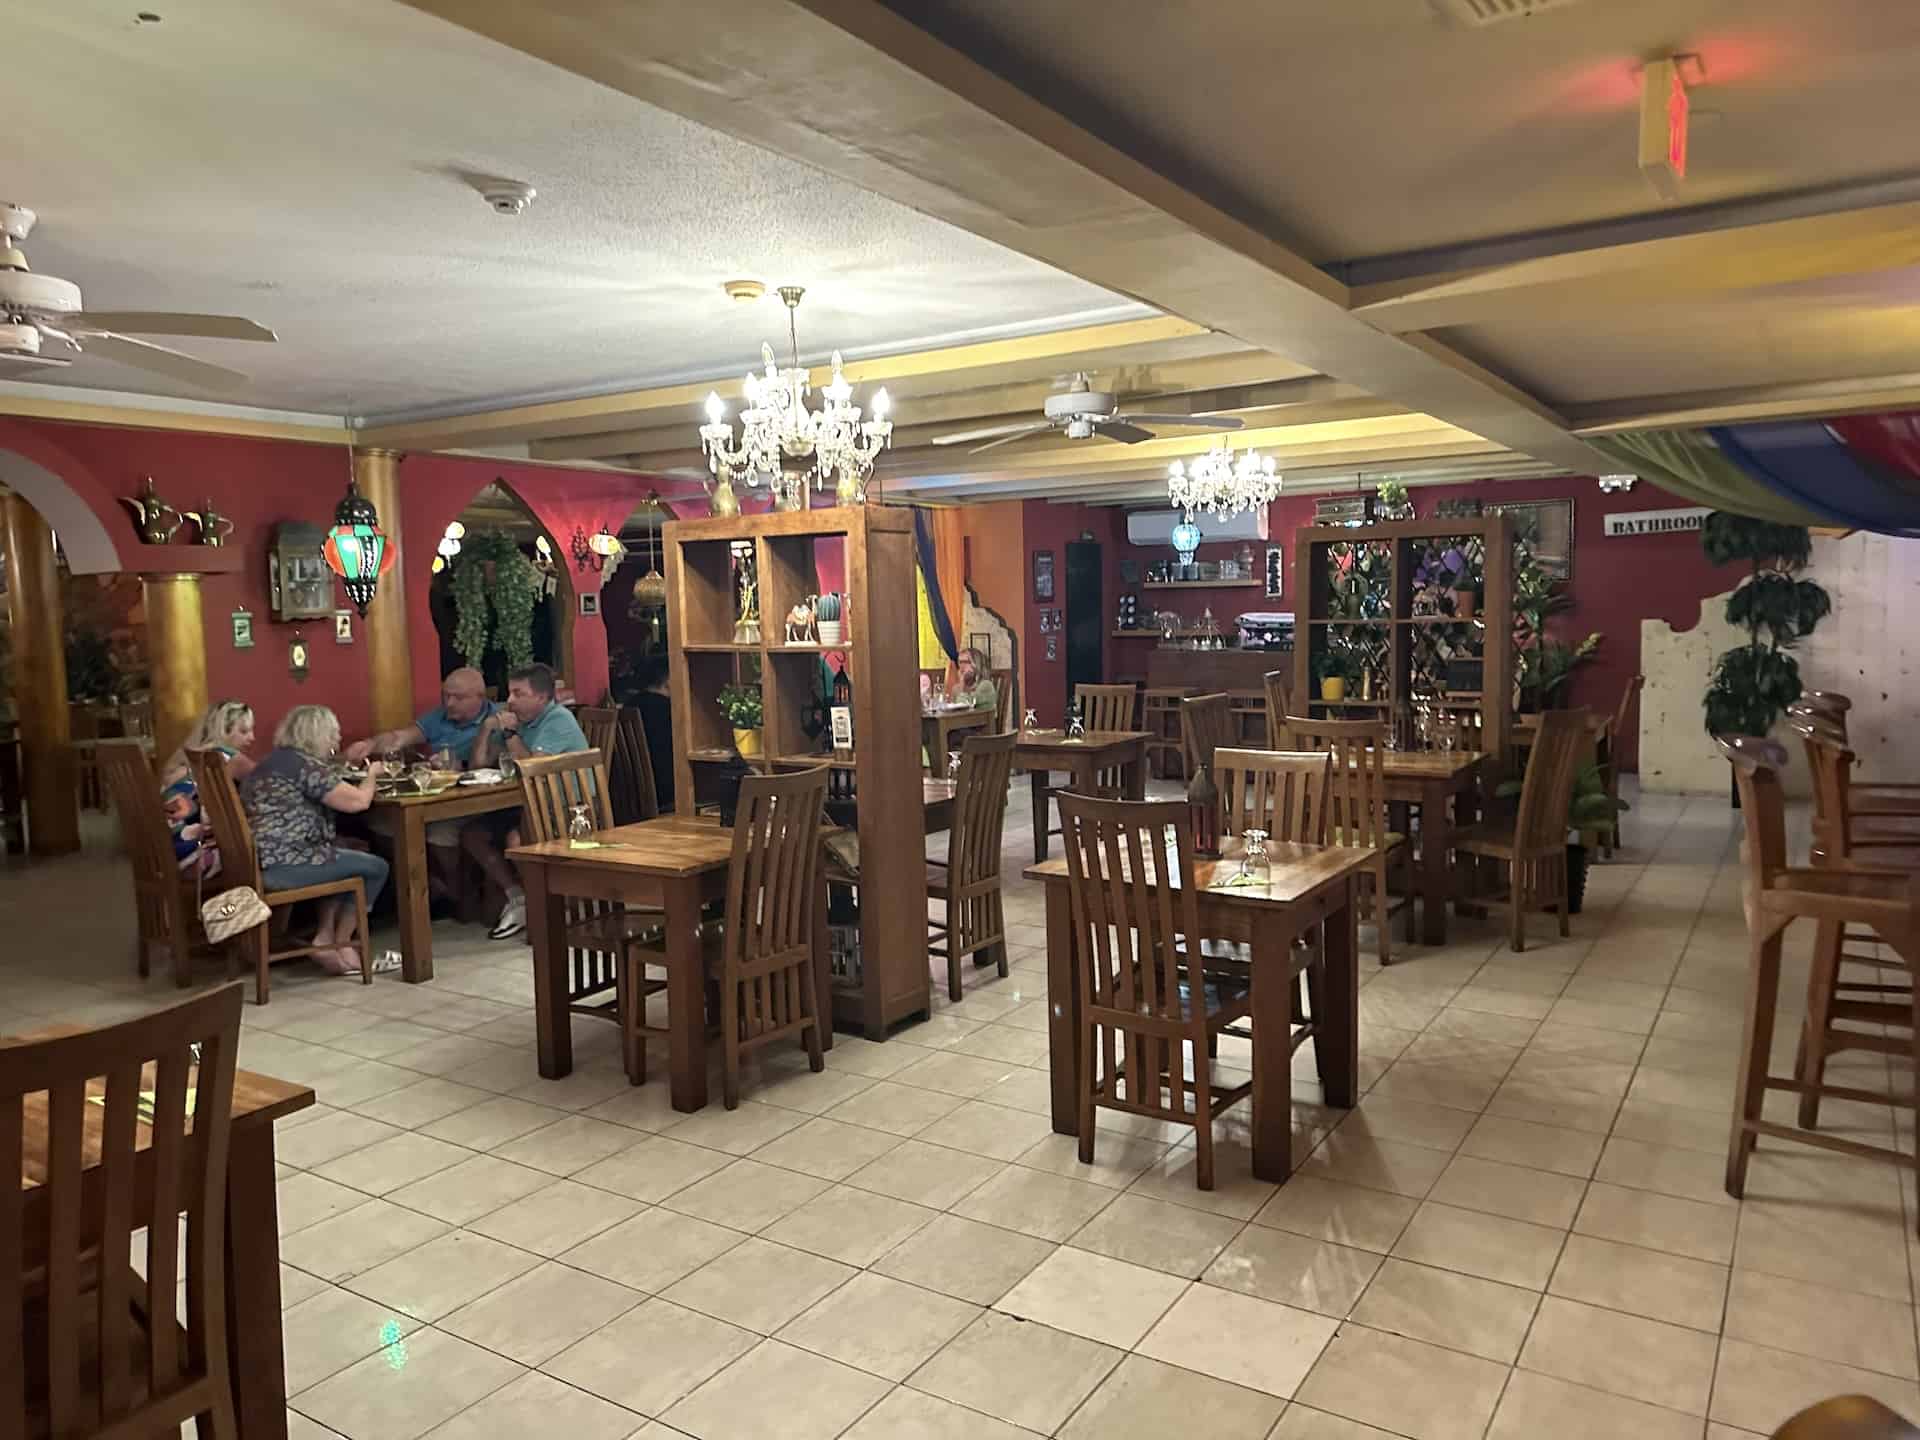 Dining room at Sultan in Palm Beach, Noord, Aruba